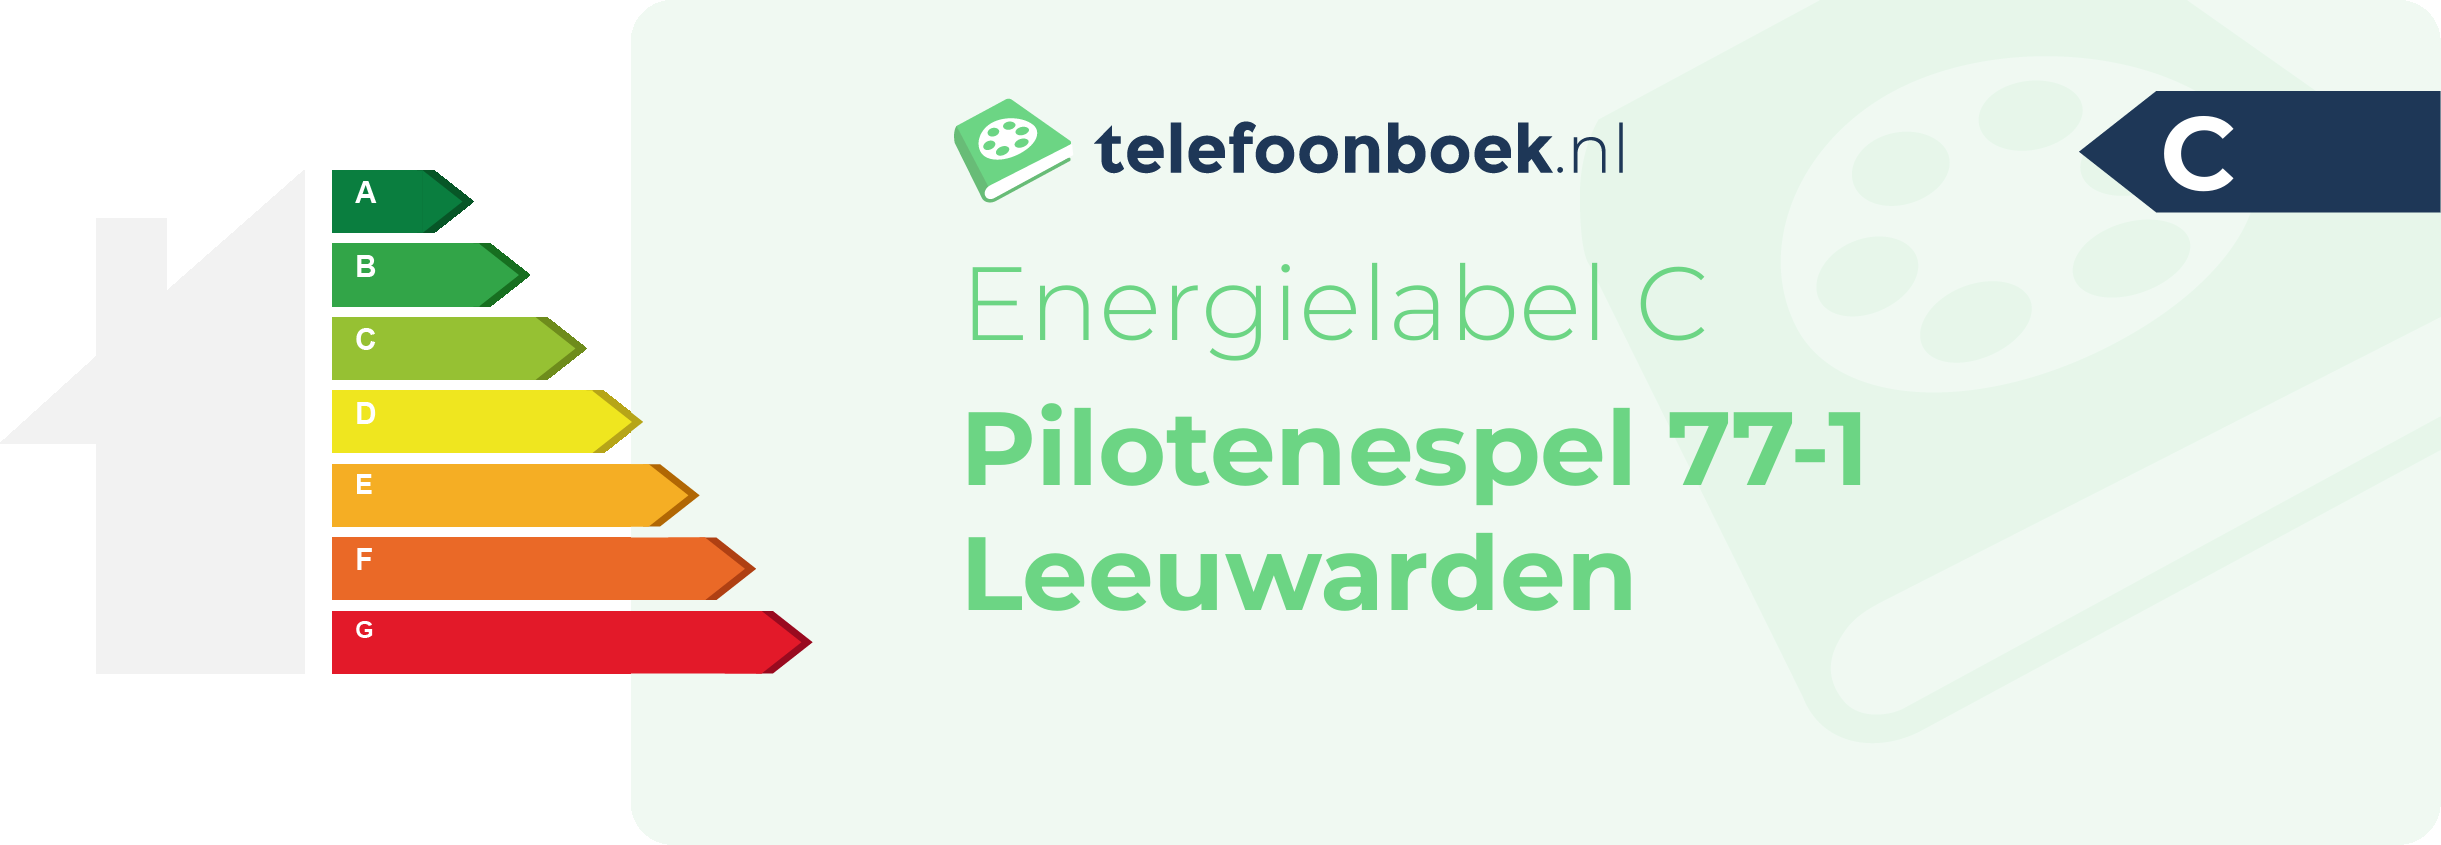 Energielabel Pilotenespel 77-1 Leeuwarden